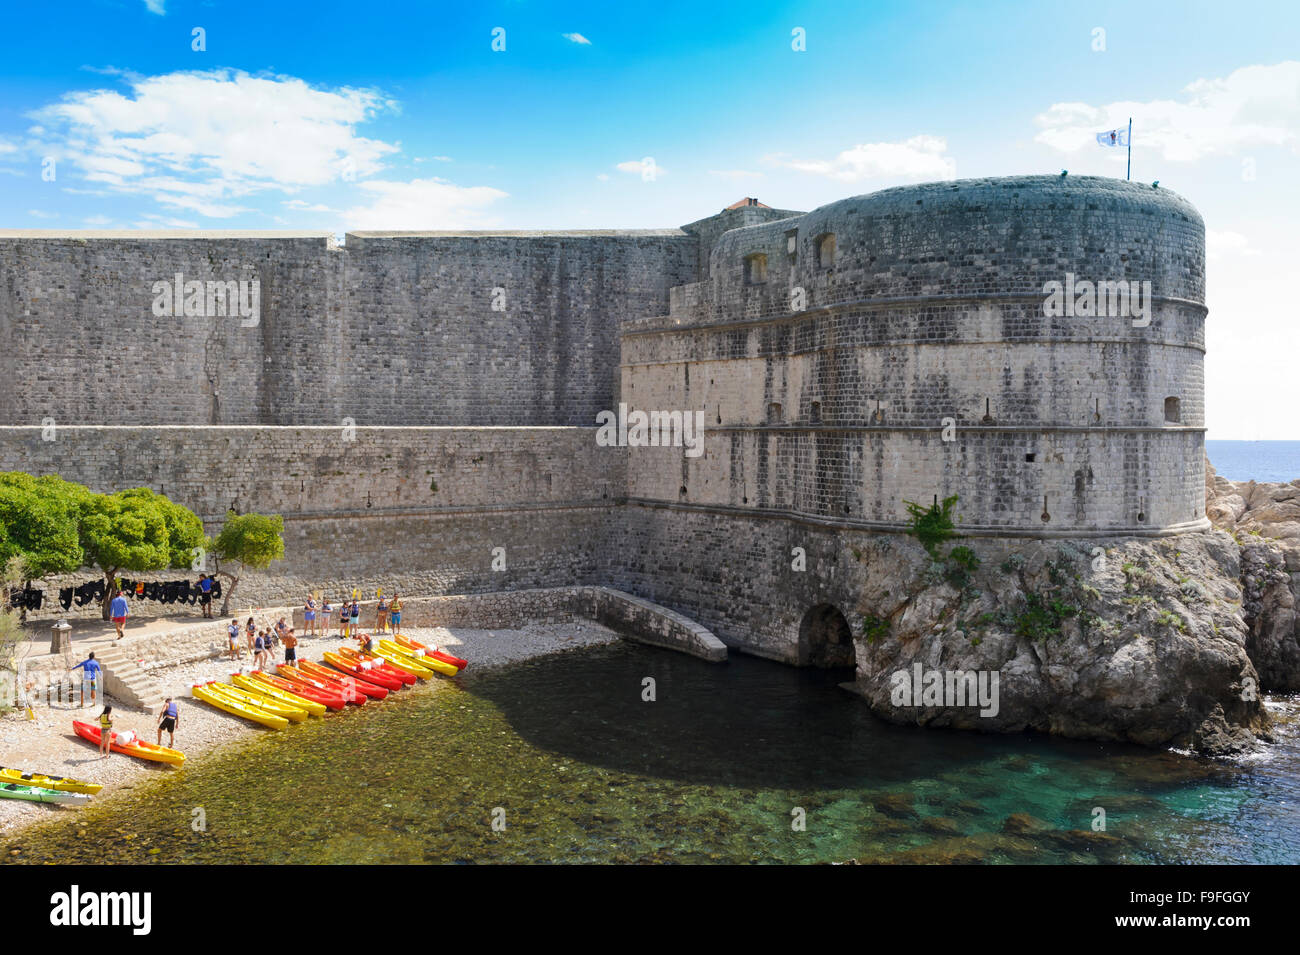 The old fortress stone wall, Dubrovnik, Croatia. Stock Photo